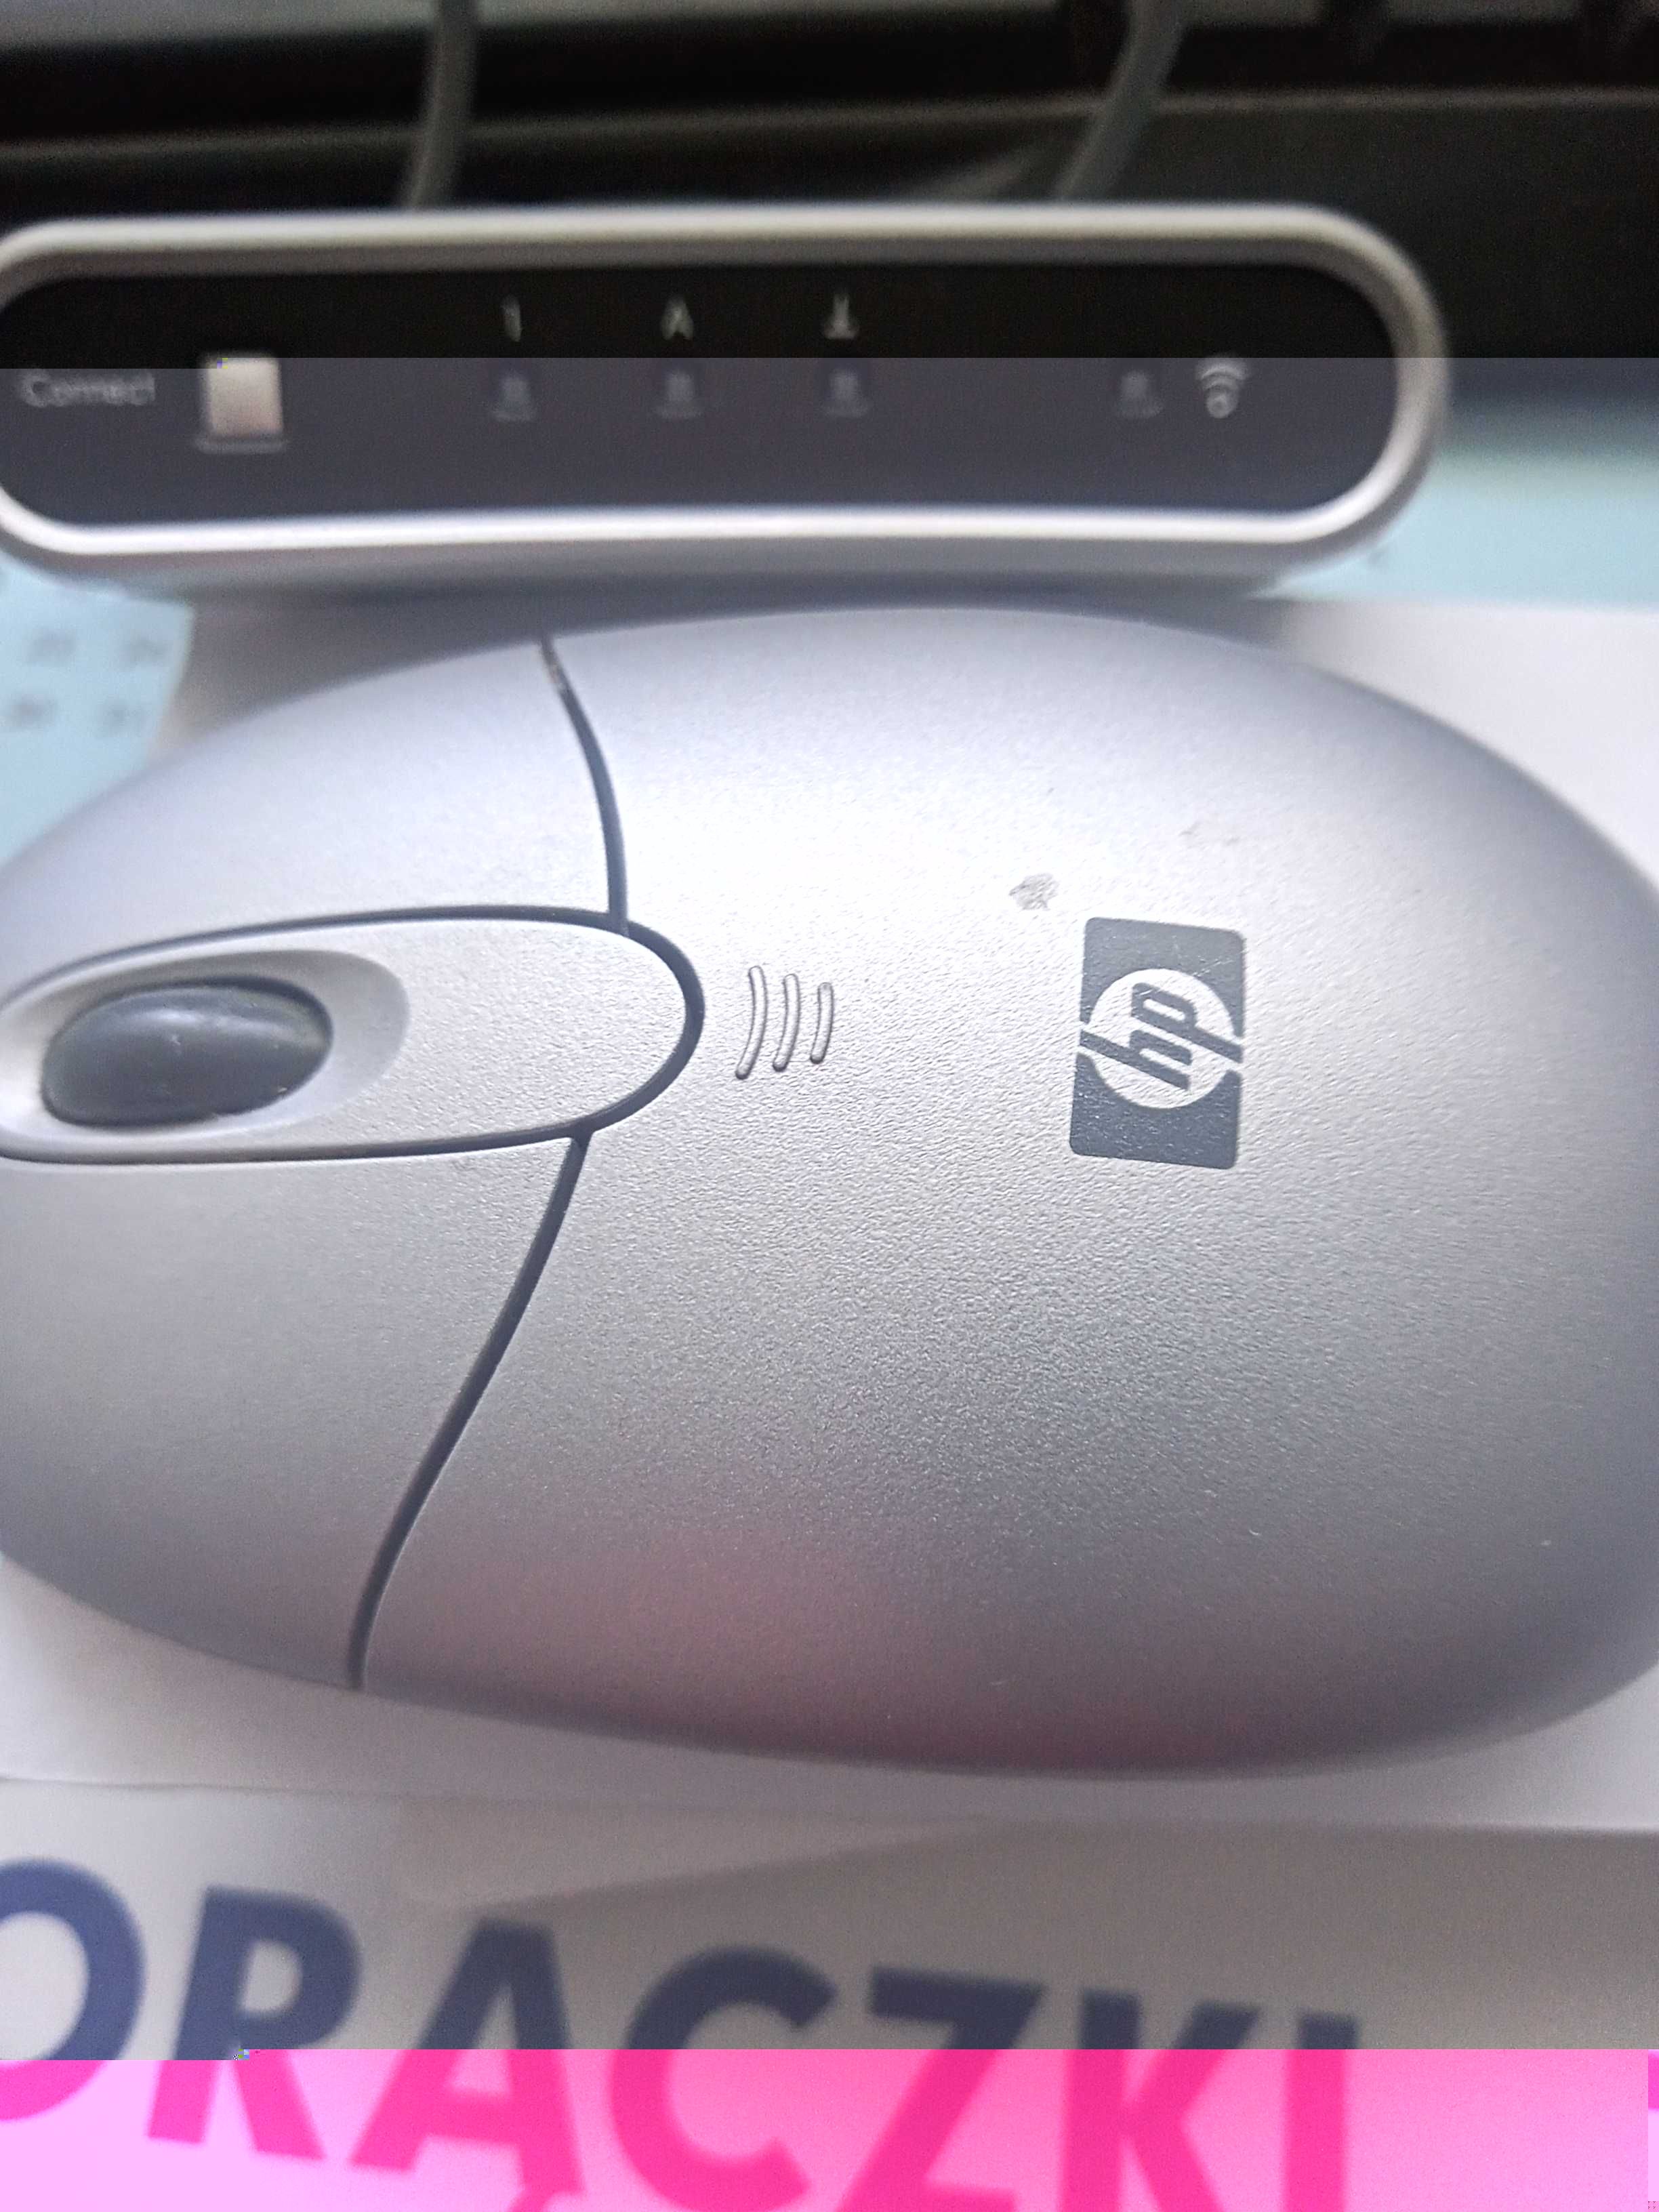 Oryginalna   HP myszka bezprzewodowa do komputera mod. C-UQ-HP1 HP